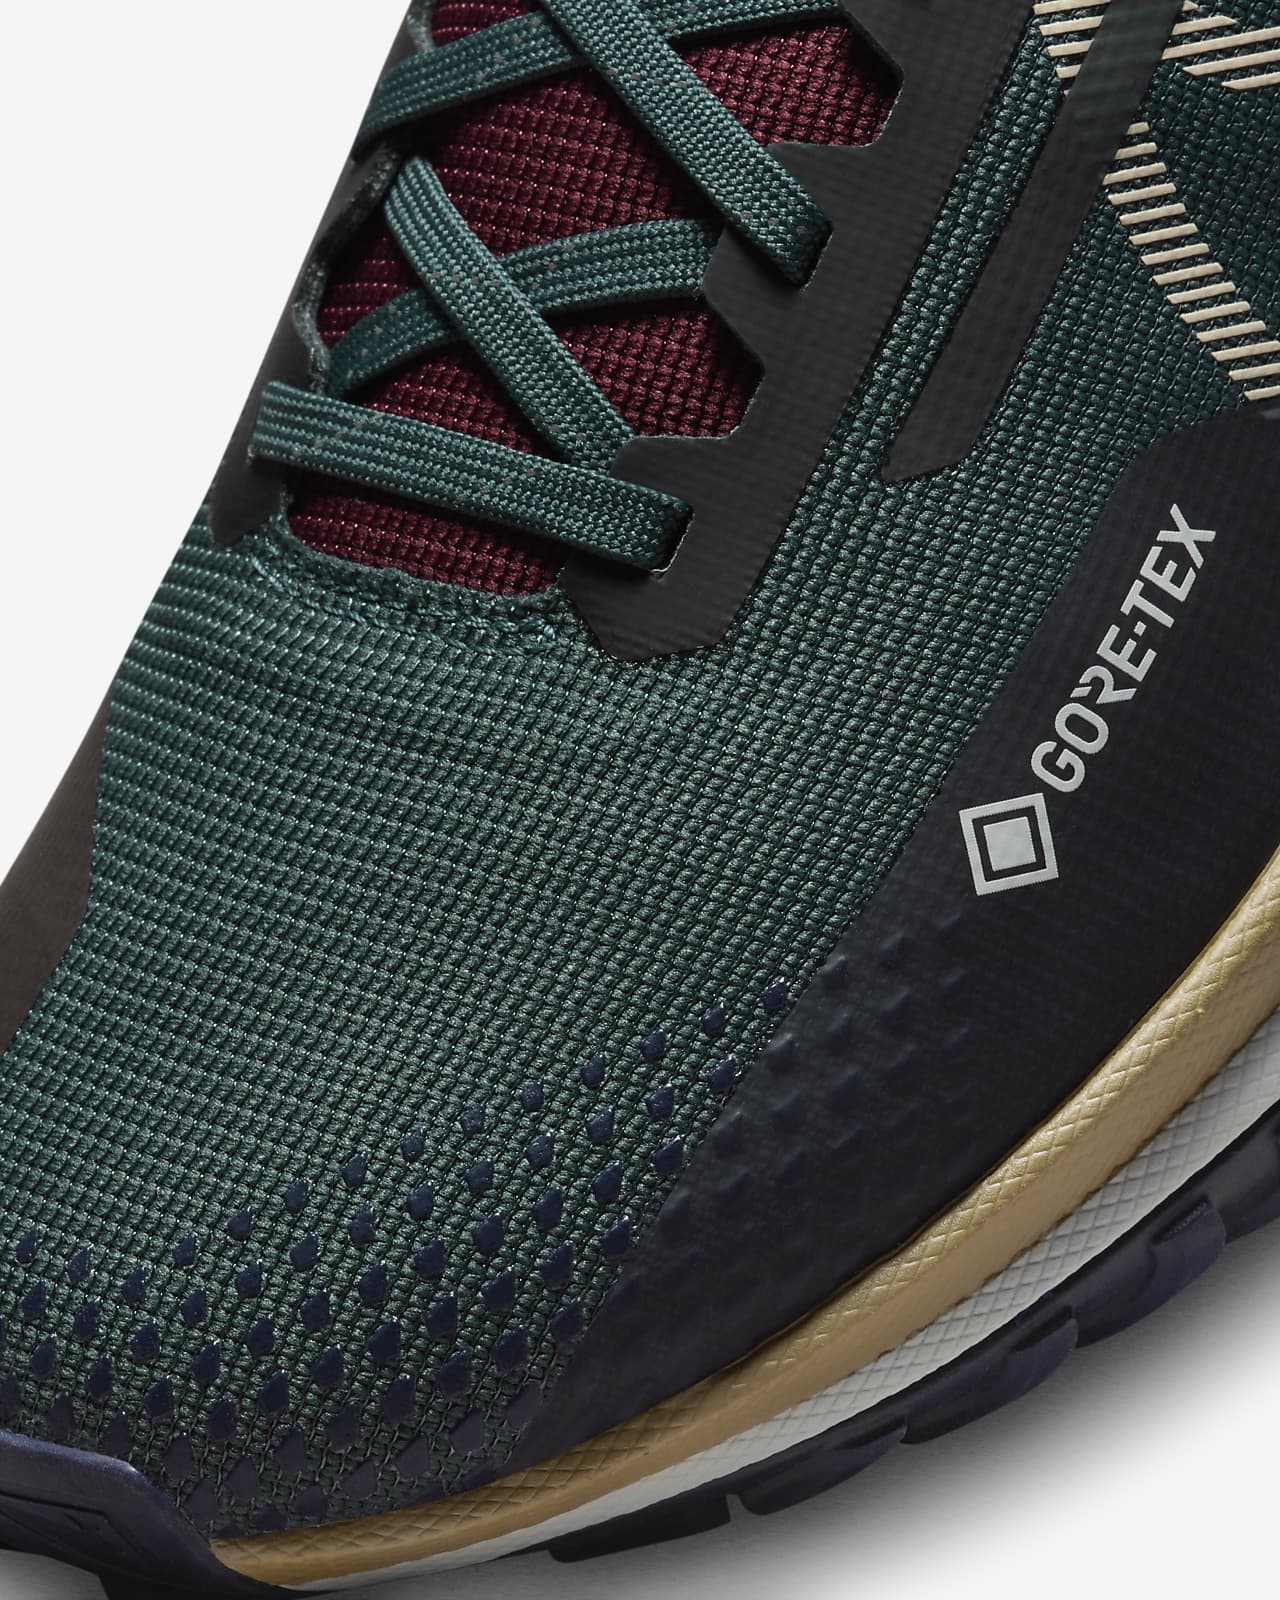 Nike Pegasus Trail 4 GORE-TEX Men's Waterproof Trail Running Shoes.